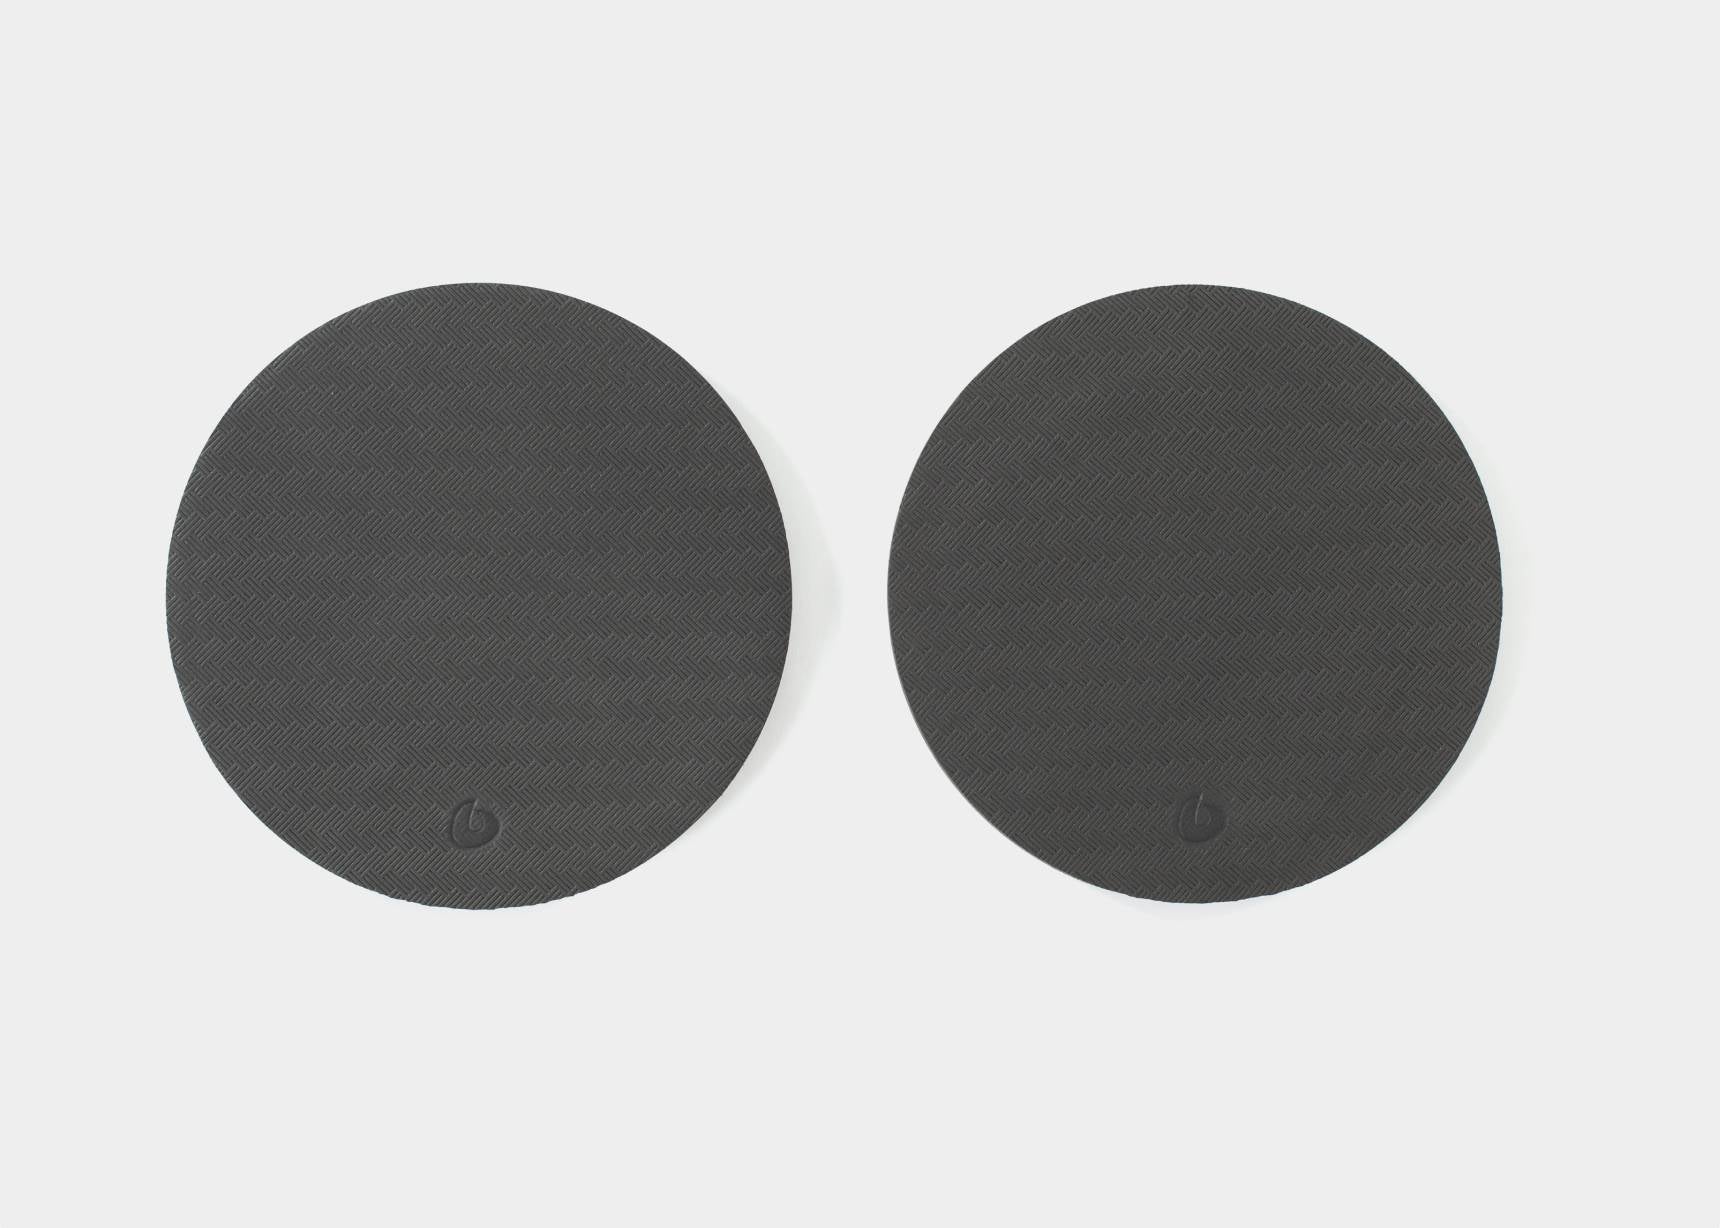 Two black Balanced Body rotator disc pads.